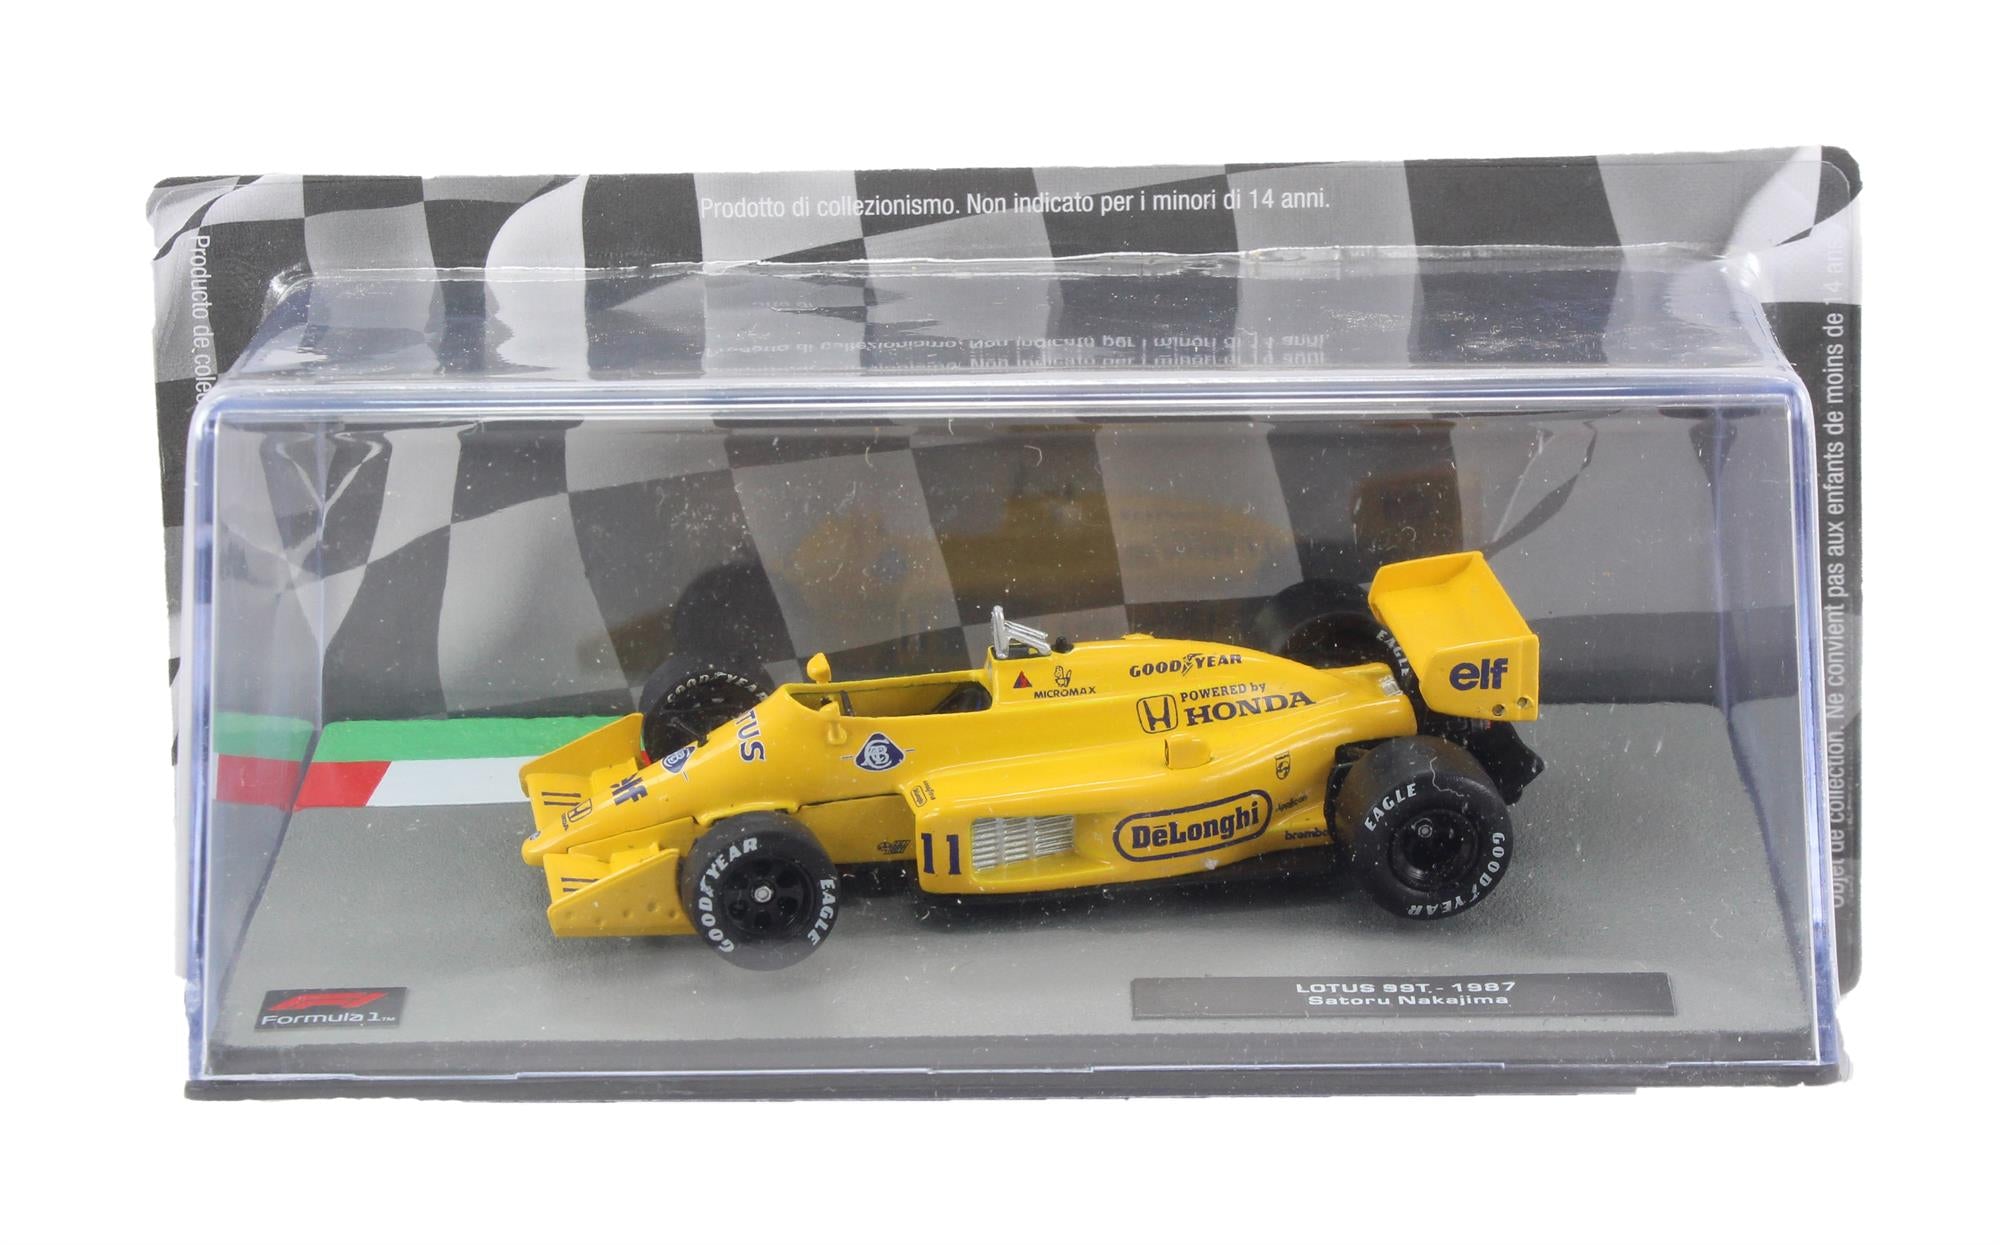 Deagostini Diecast 1:43 F1 Scale Model - Satoru Nakajima F1 Lotus 99T Race Car 1987 - Toptoys2u